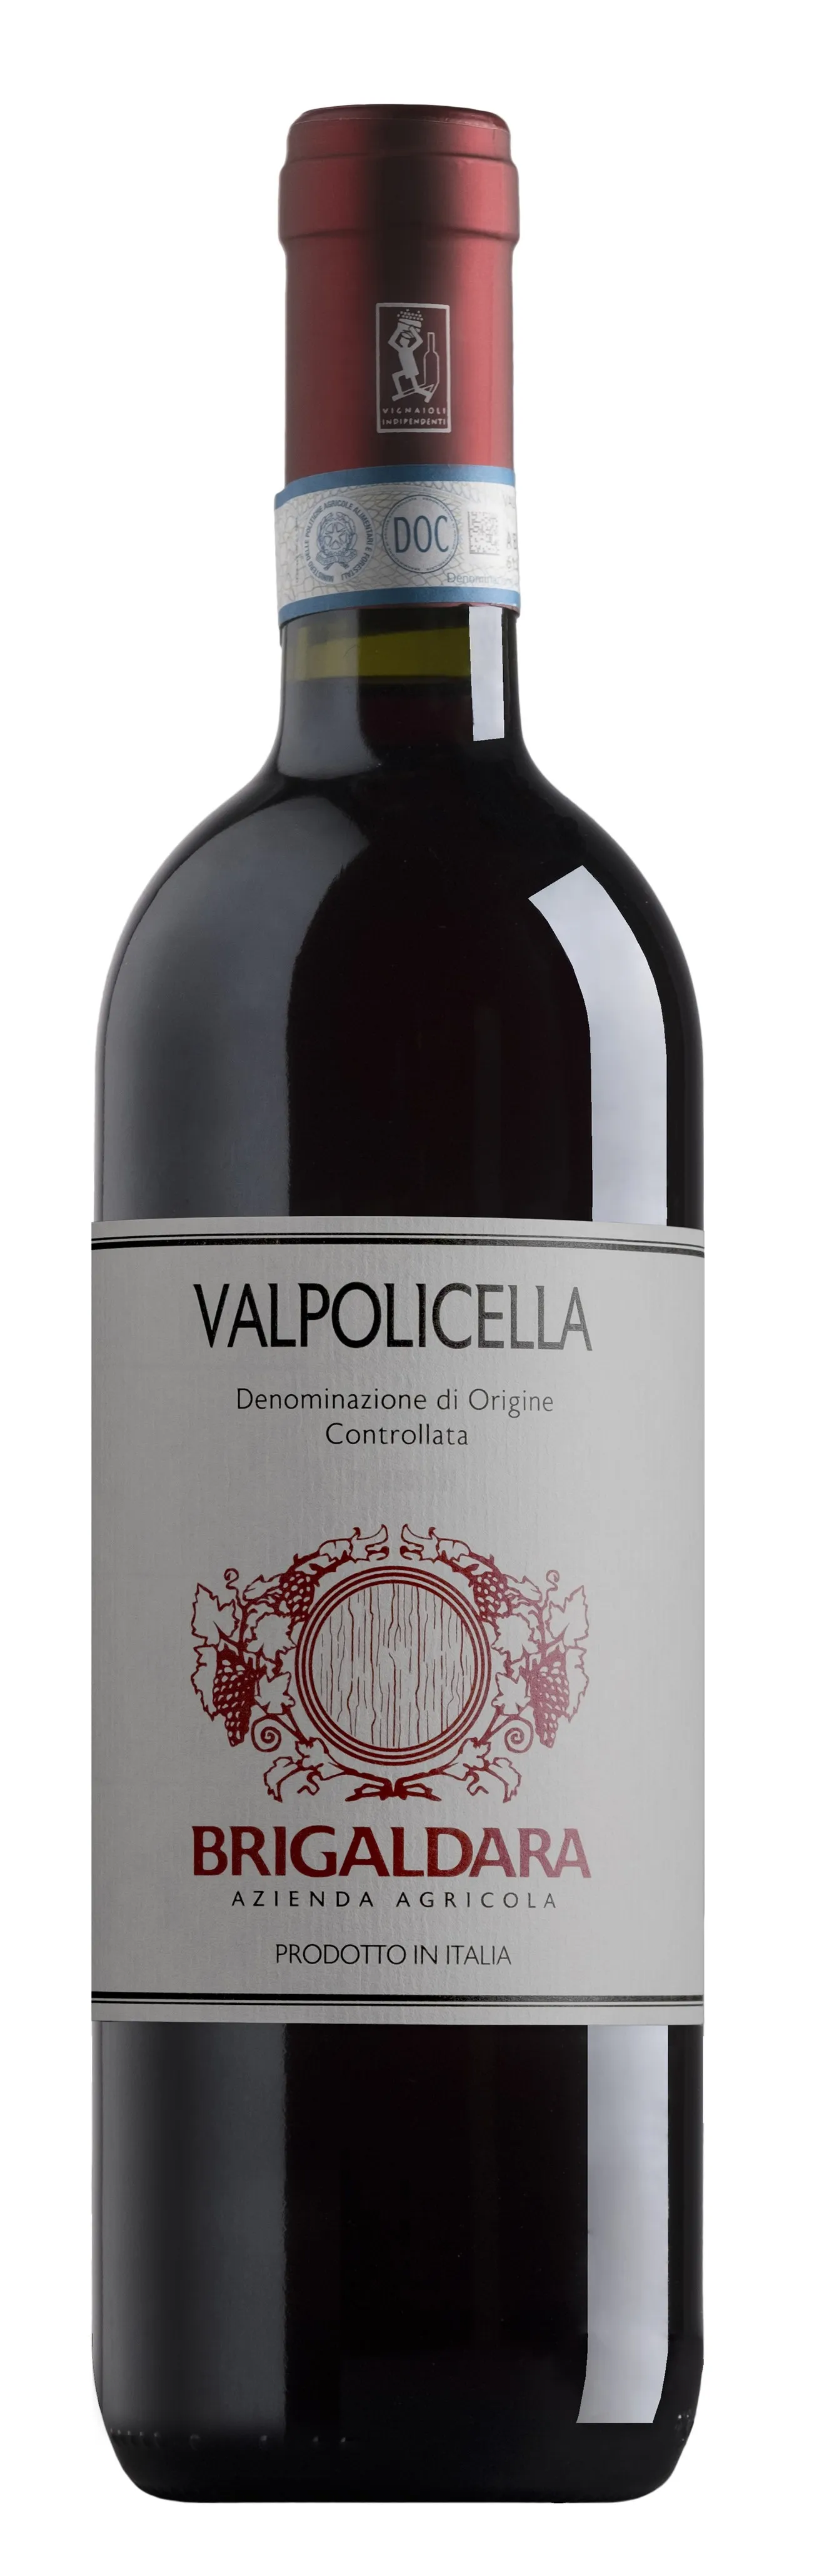 Bottle of Brigaldara Valpolicellawith label visible